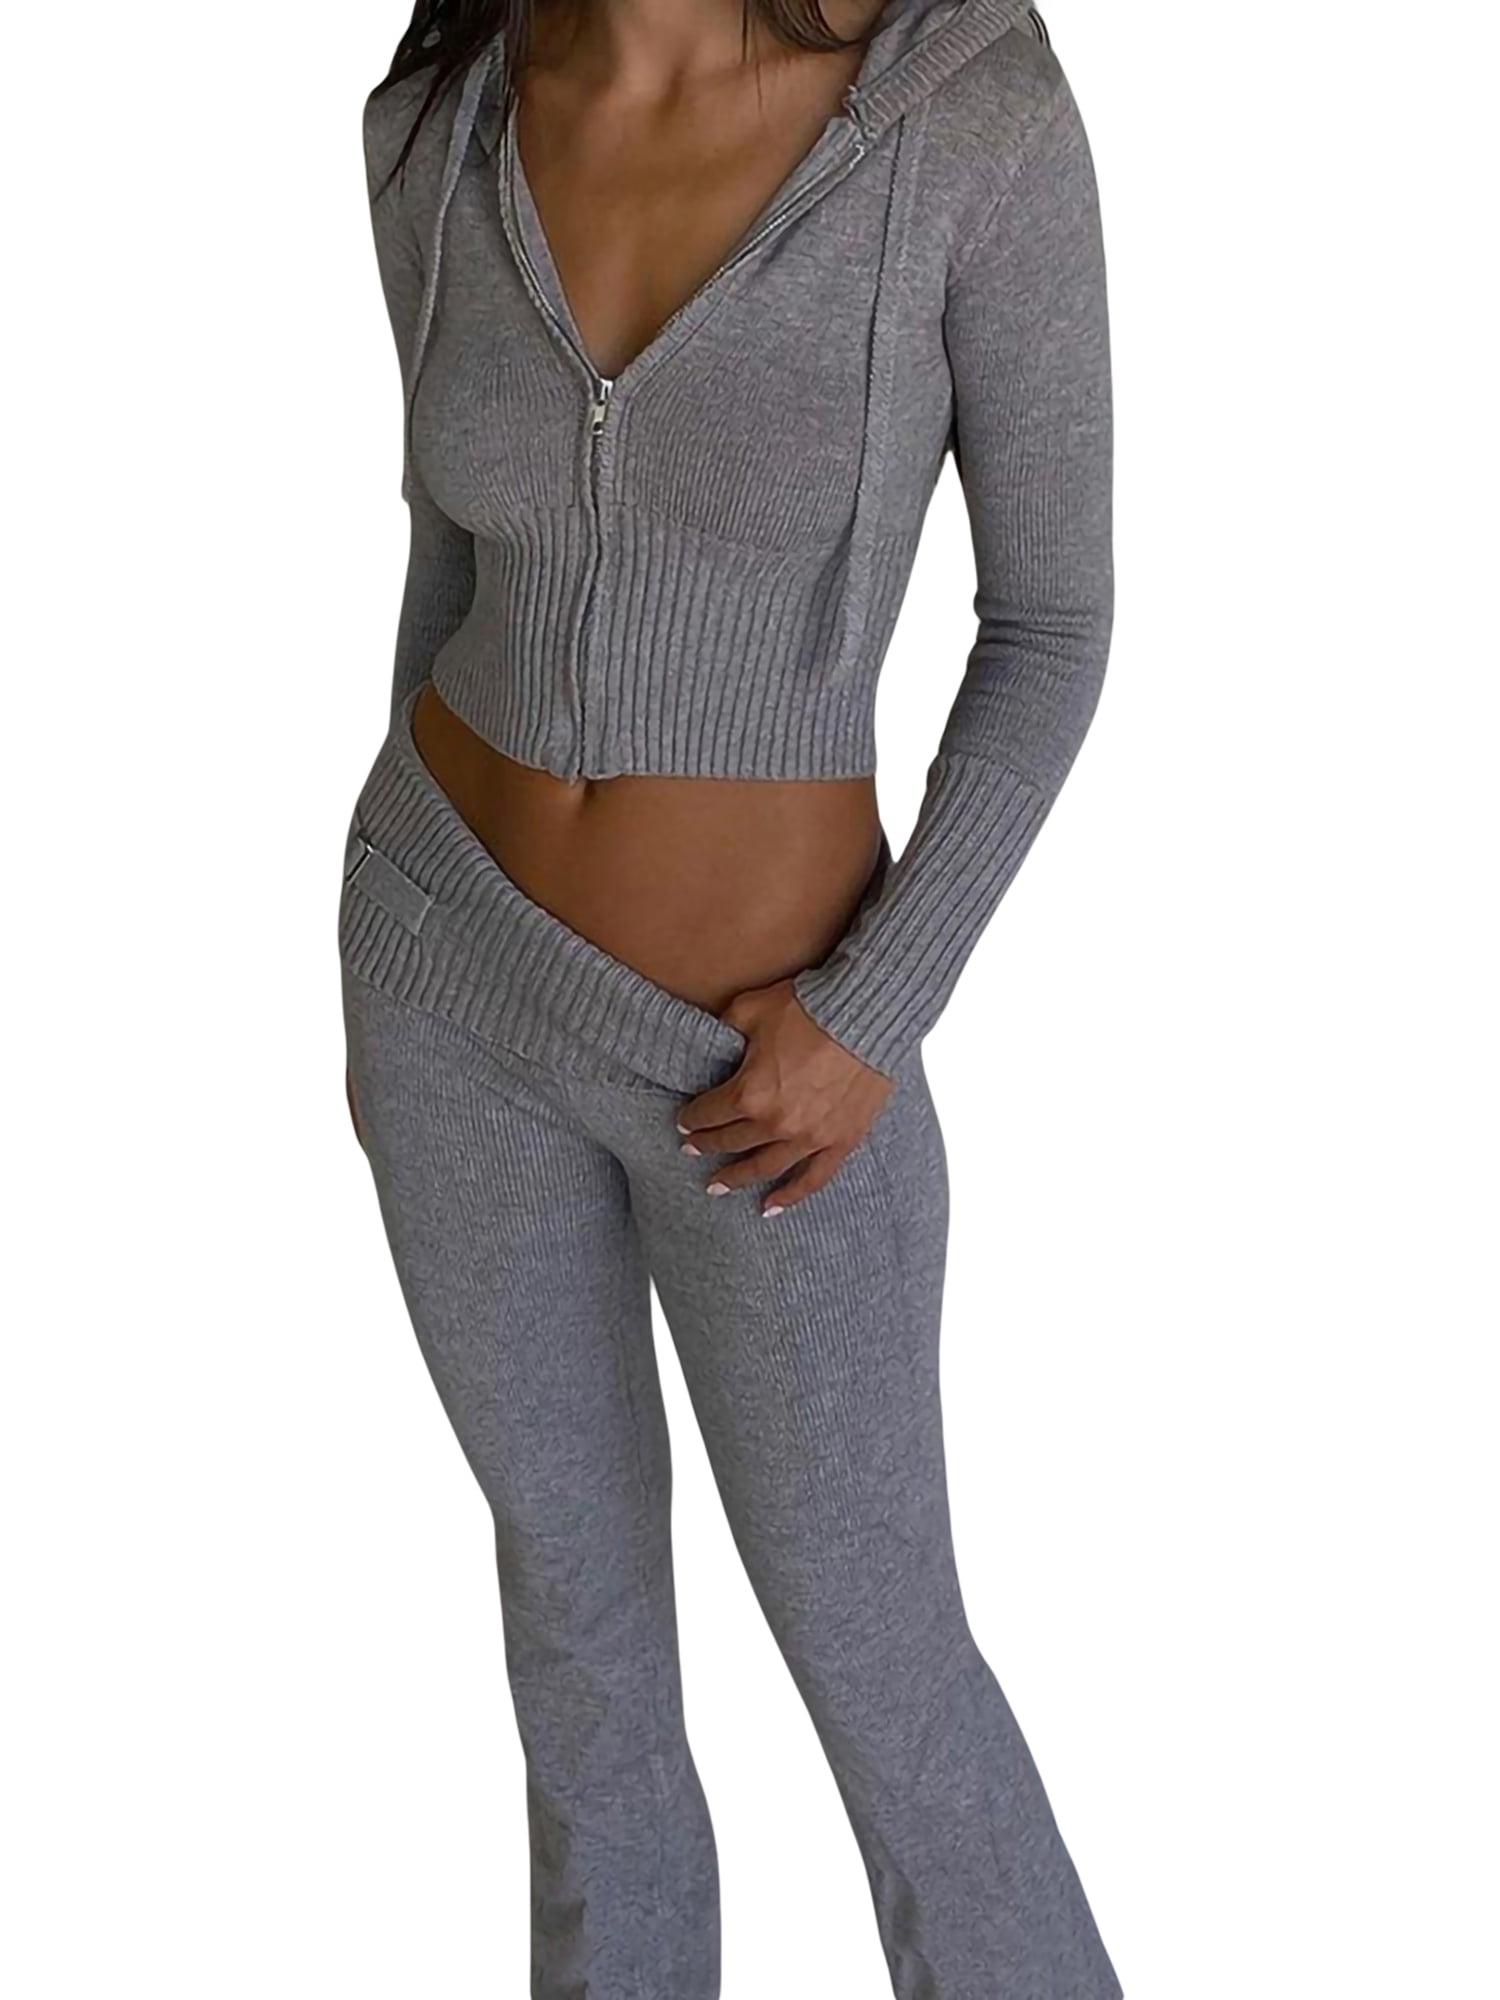 Women Knit 2 Piece Outfits Long Sleeve Zipper Hooded Crop Top High Waist  Skinny Pants Set Tracksuit Loungewear